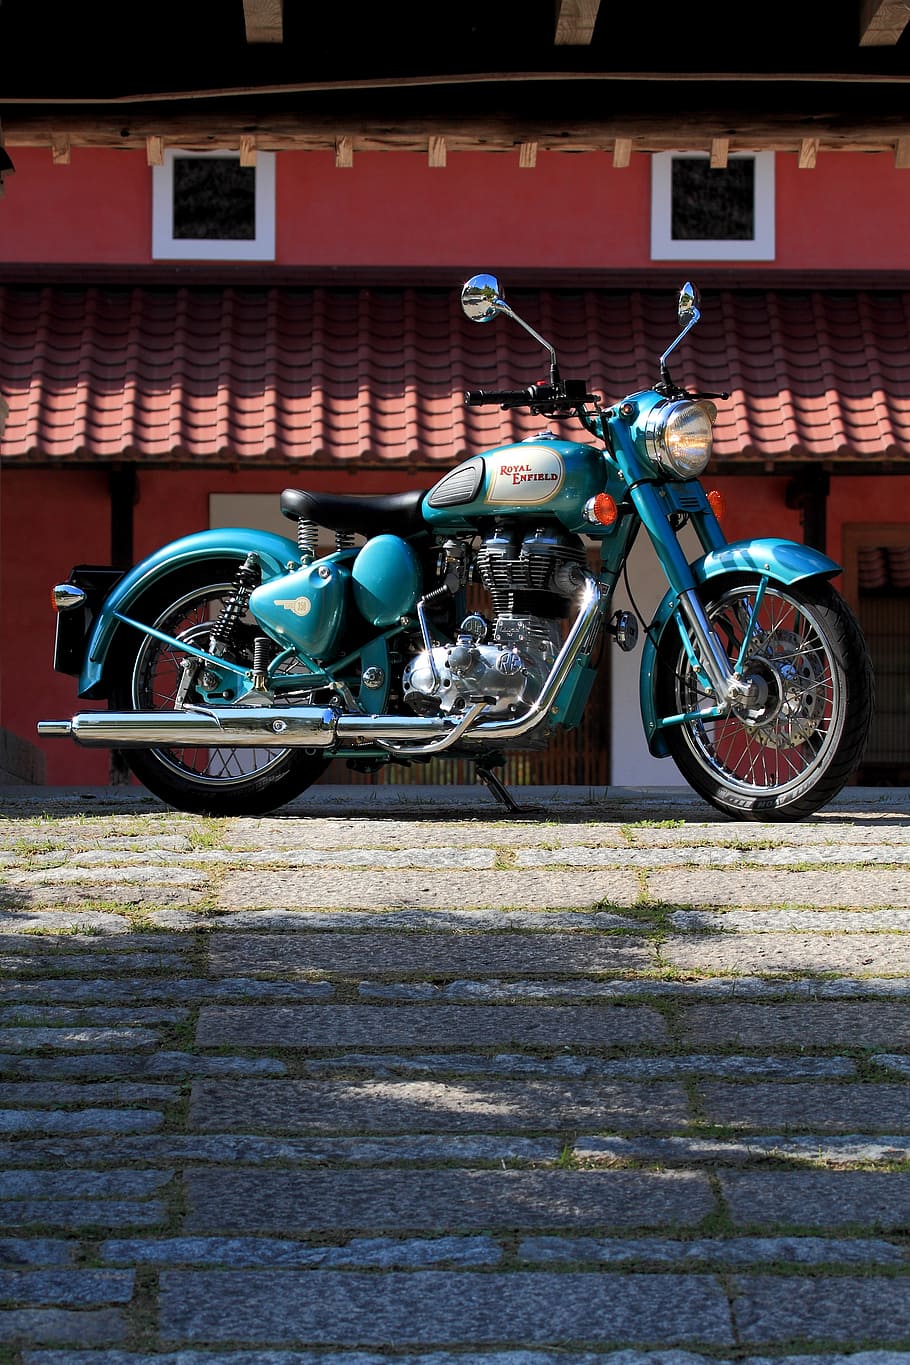 parked, blue, black, cruiser motorcycle, bike, vehicle, retro, classic, vintage, motorcycle